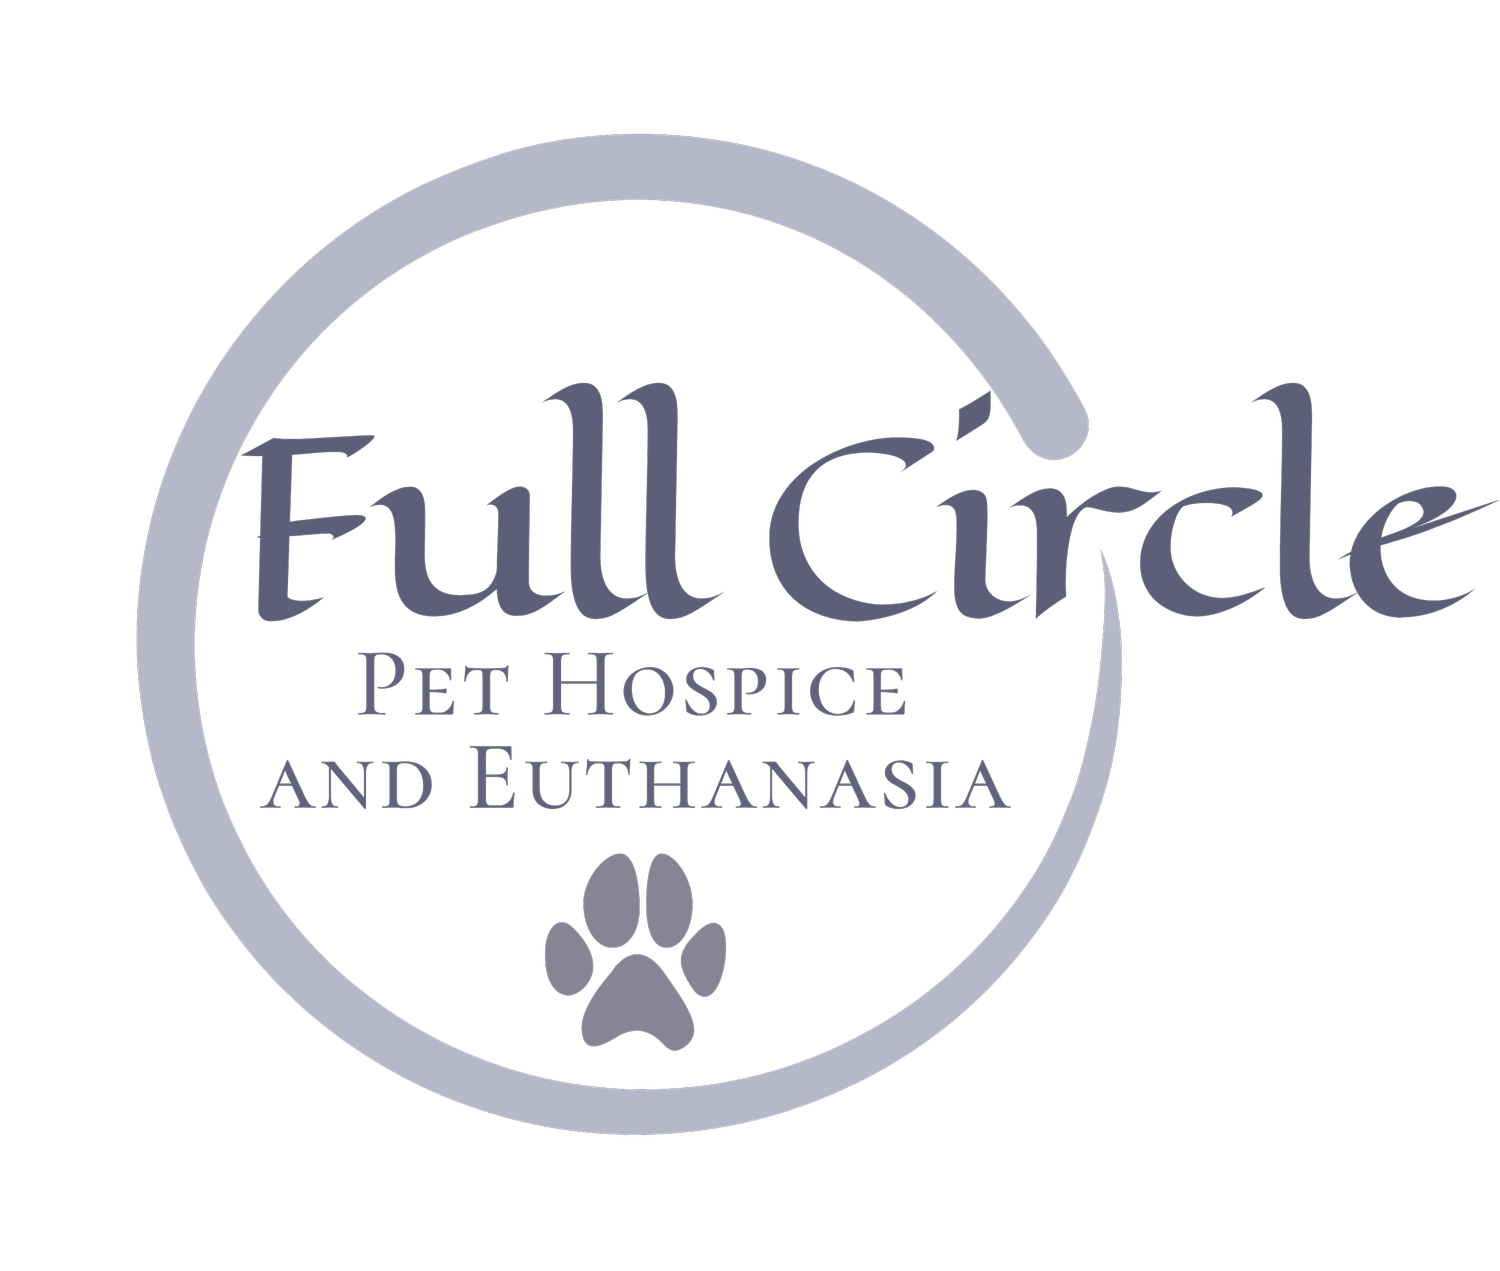 Full Circle Pet Hospice and Euthanasia